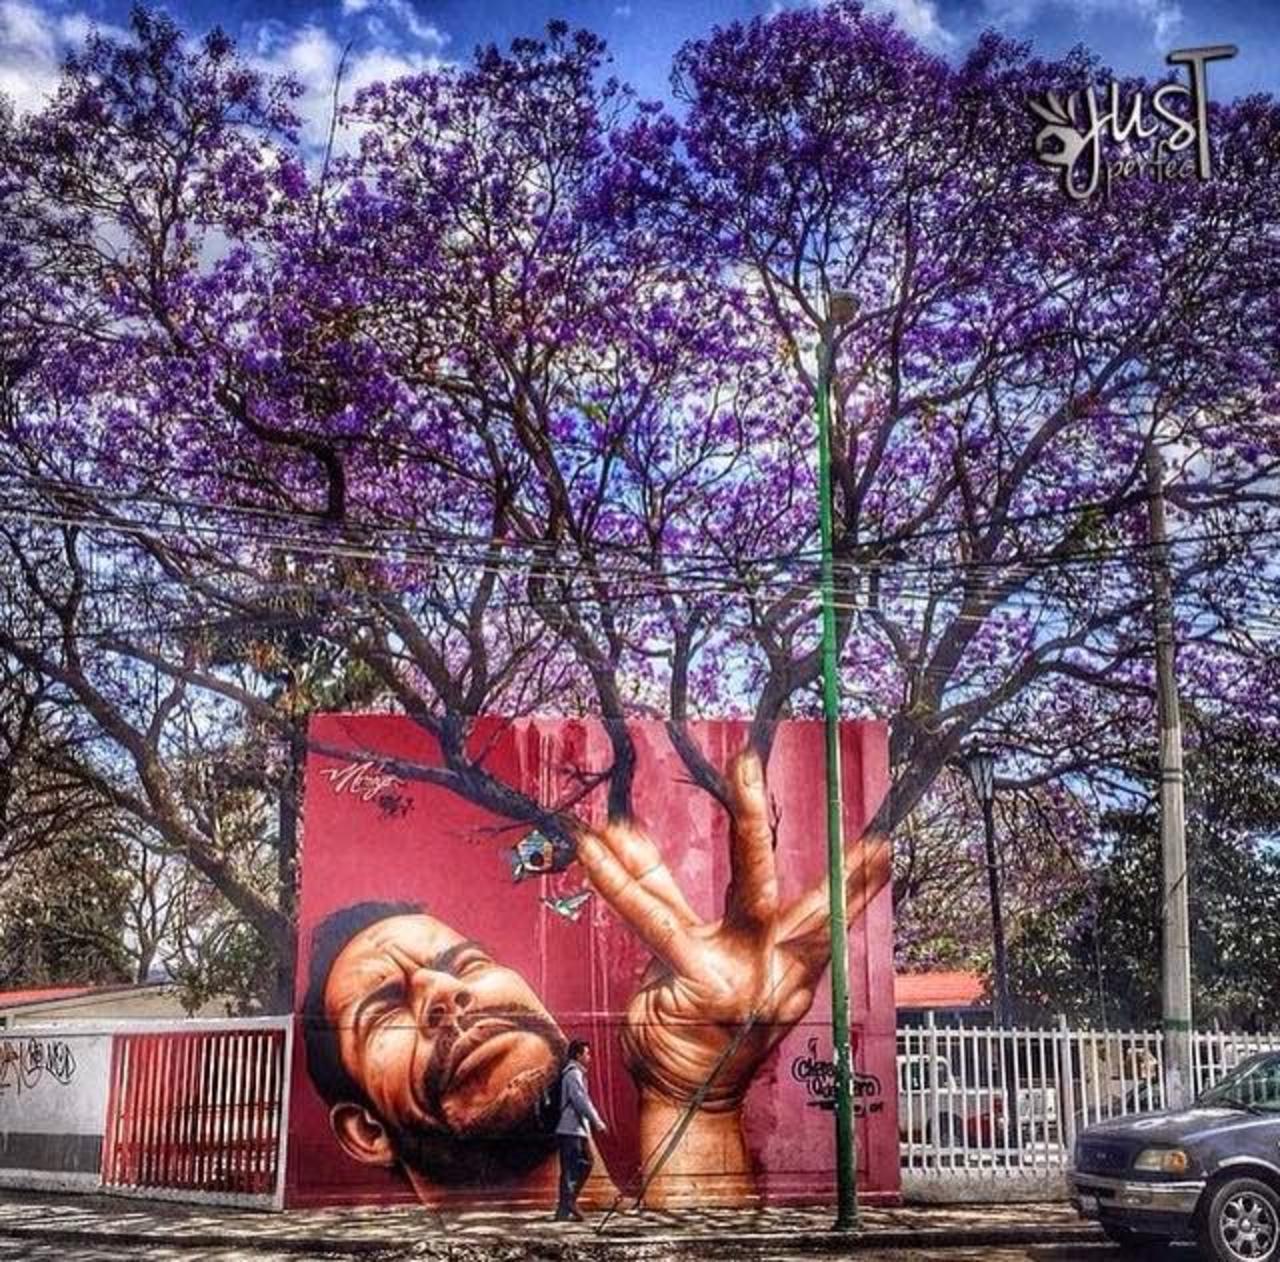 RT @upbyartists: Street art in Mexico by Jose Luis Noriega
#streetart #illustrator #art #gallery #graffiti http://t.co/YbjWa33ptF